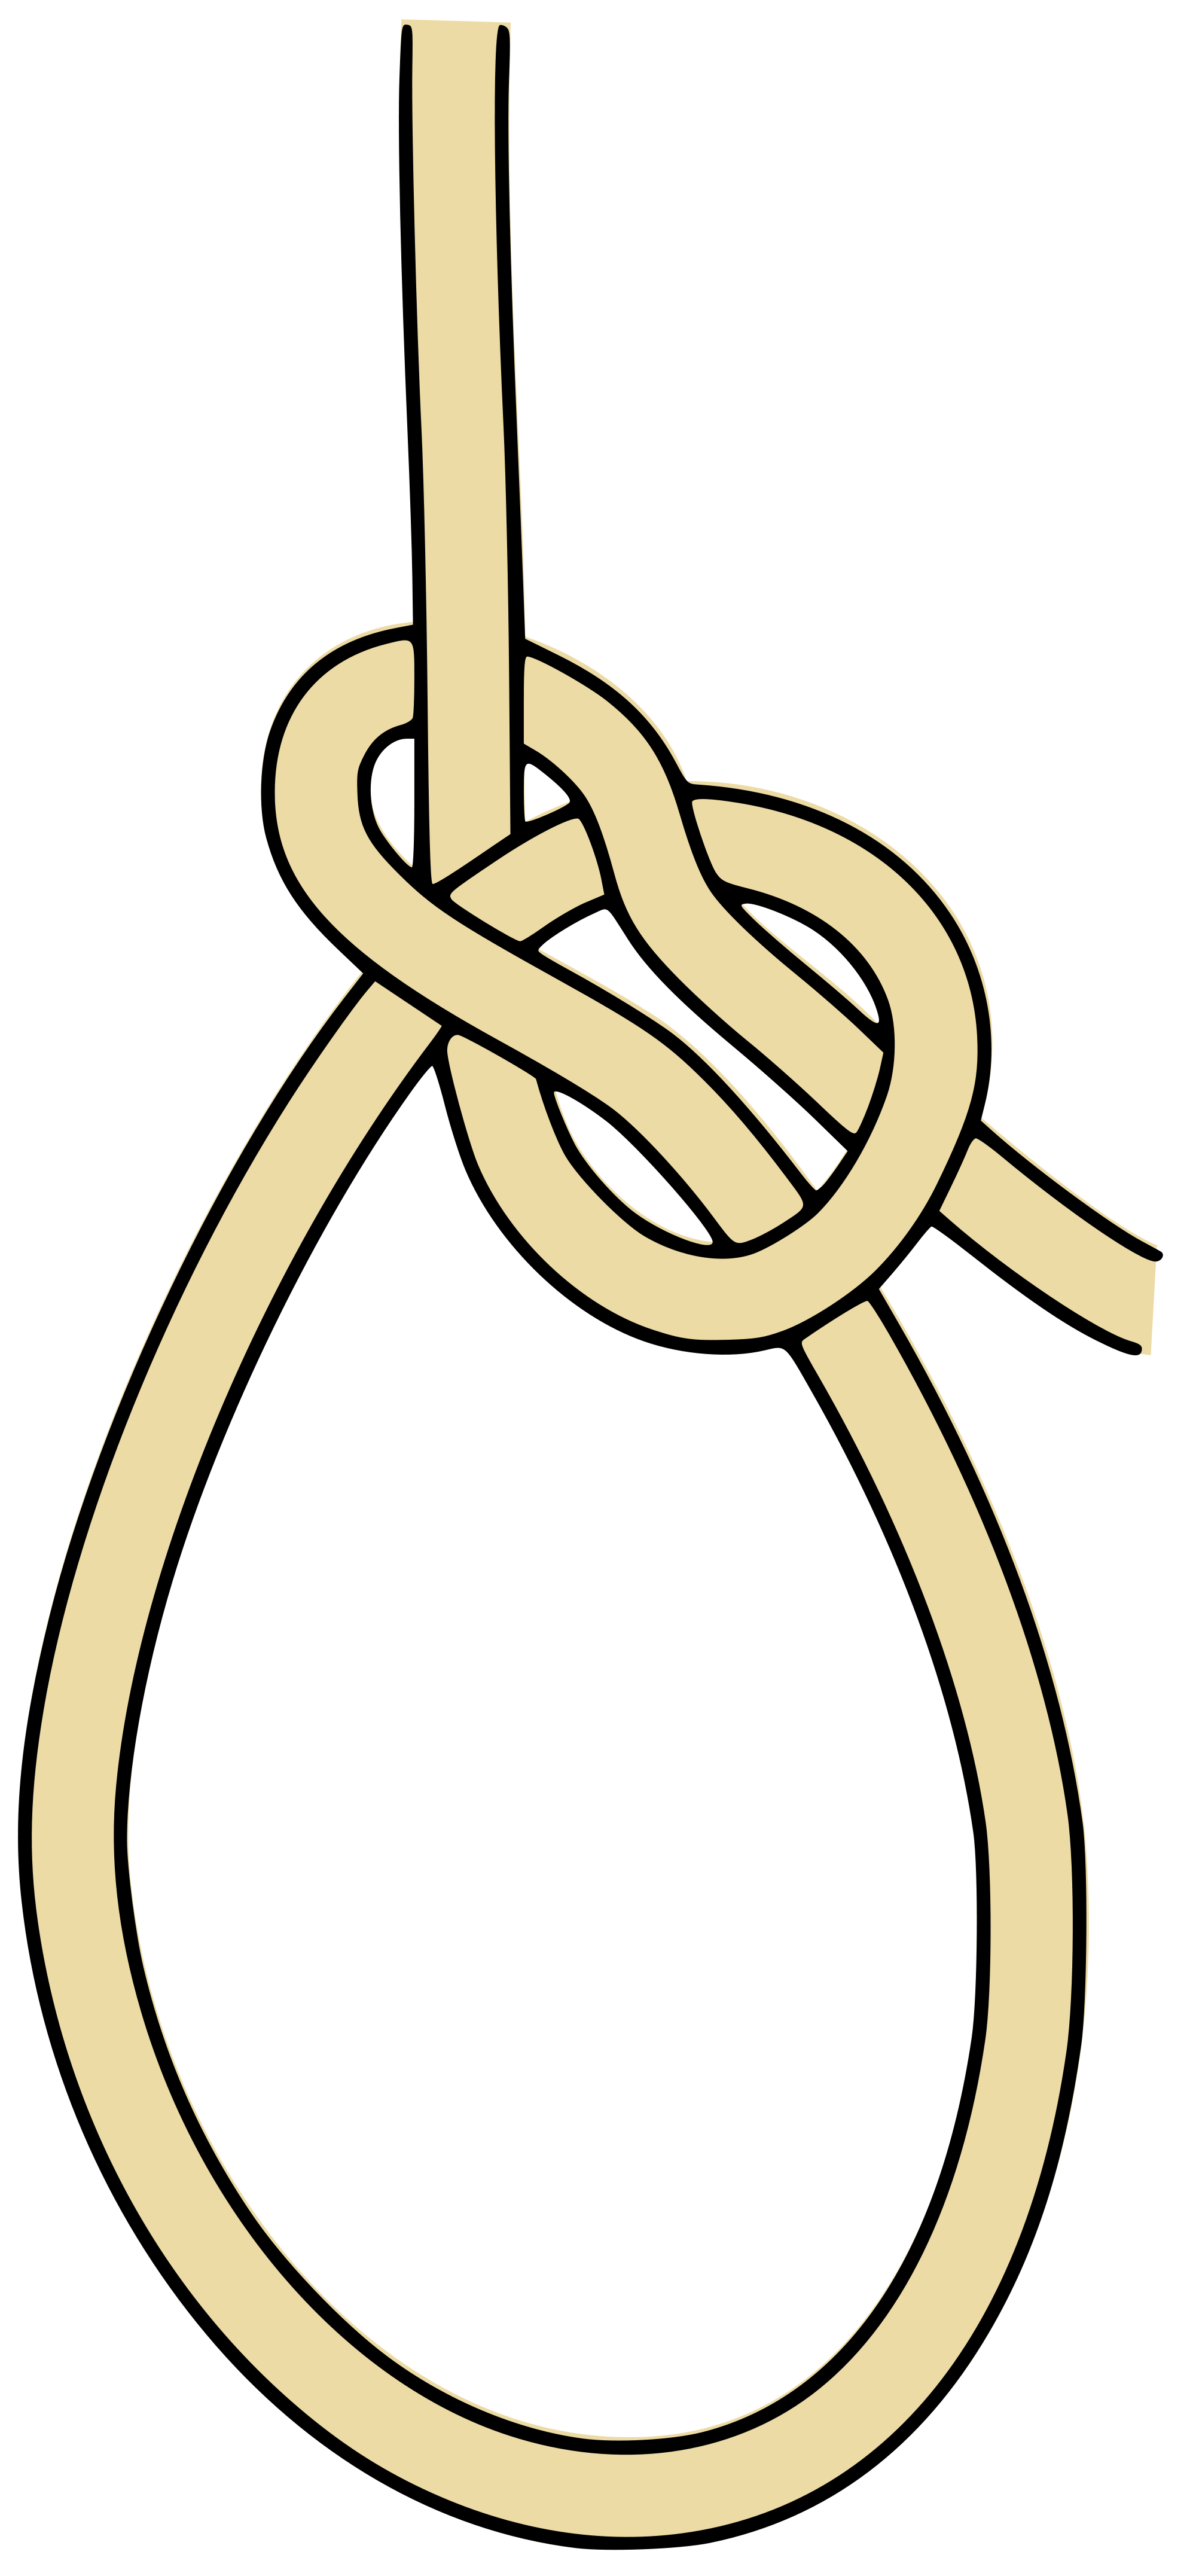 knot clipart bowline knot